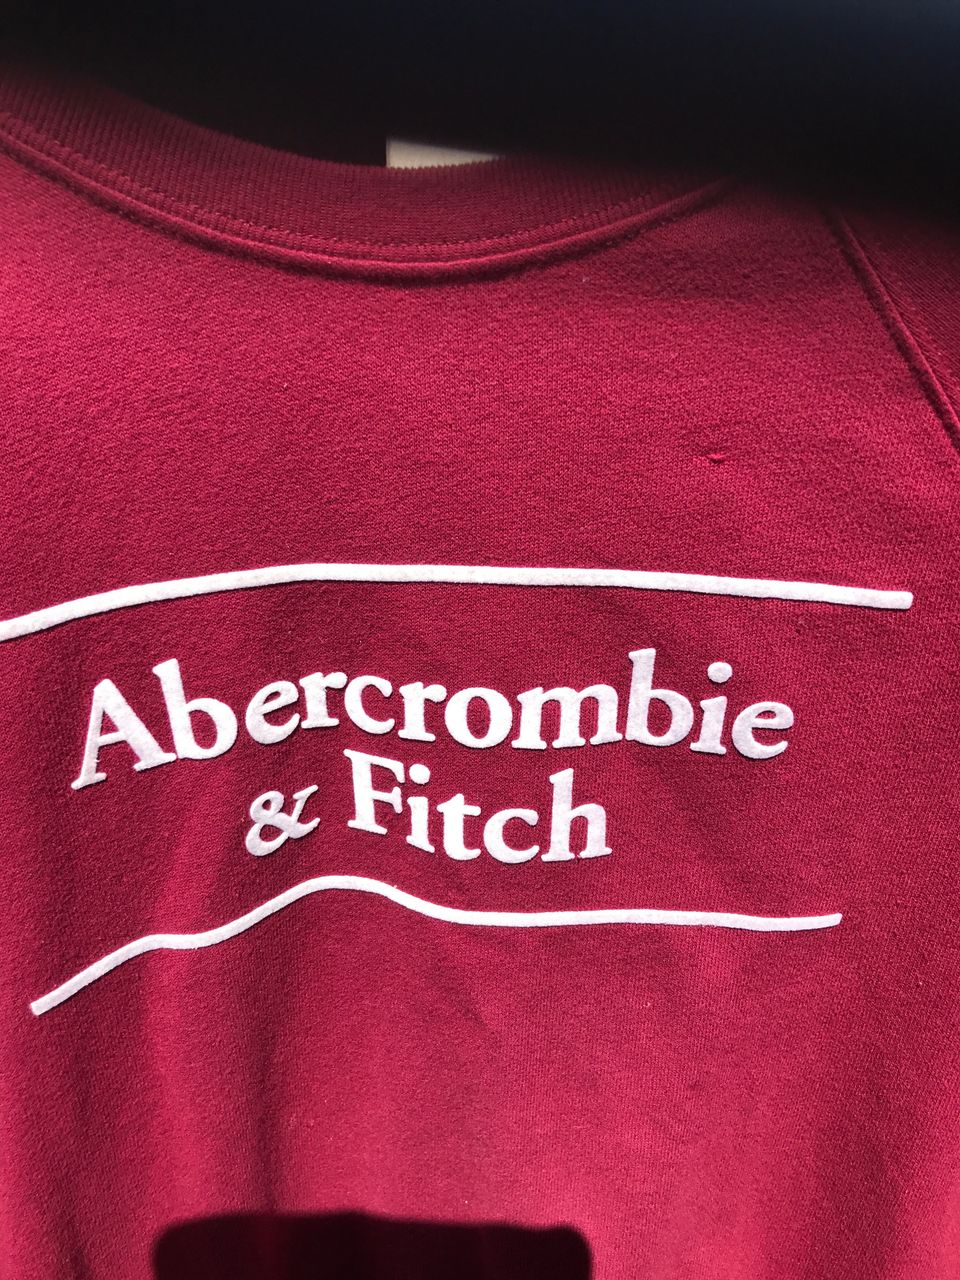 Abercrombie & Fitch collari SX